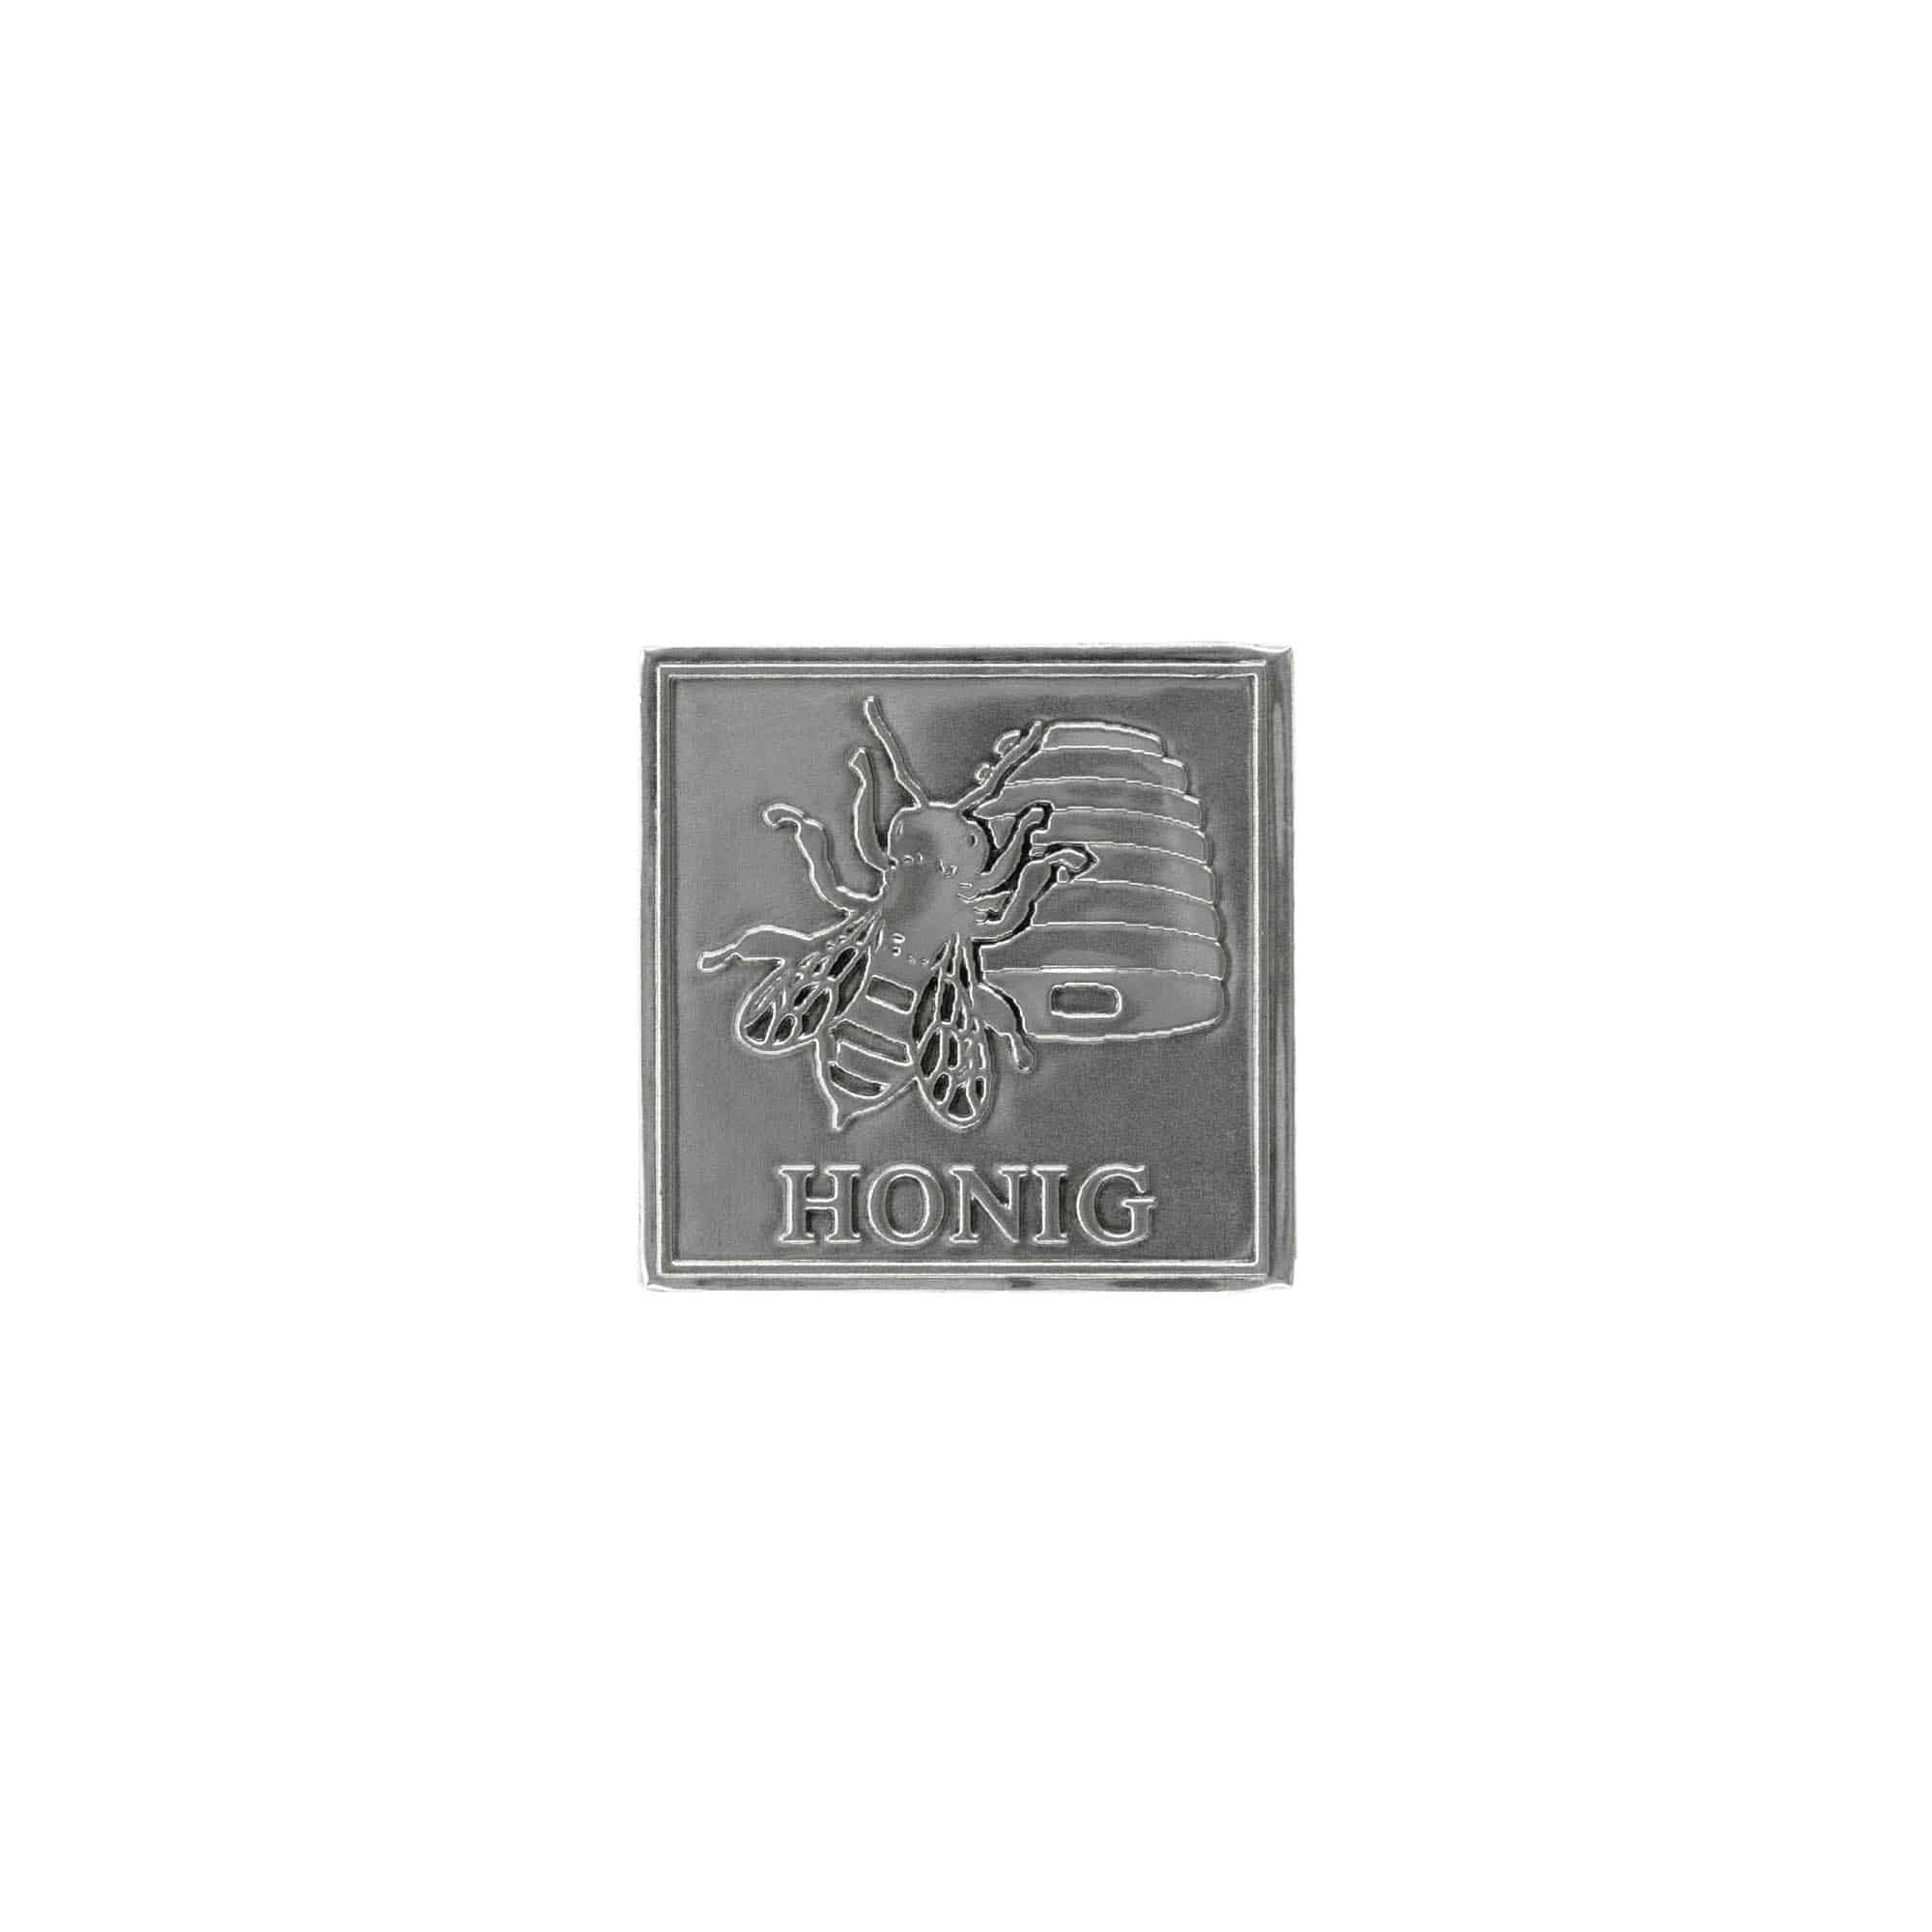 Tinetiket 'Honning', kvadratisk, metal, sølv